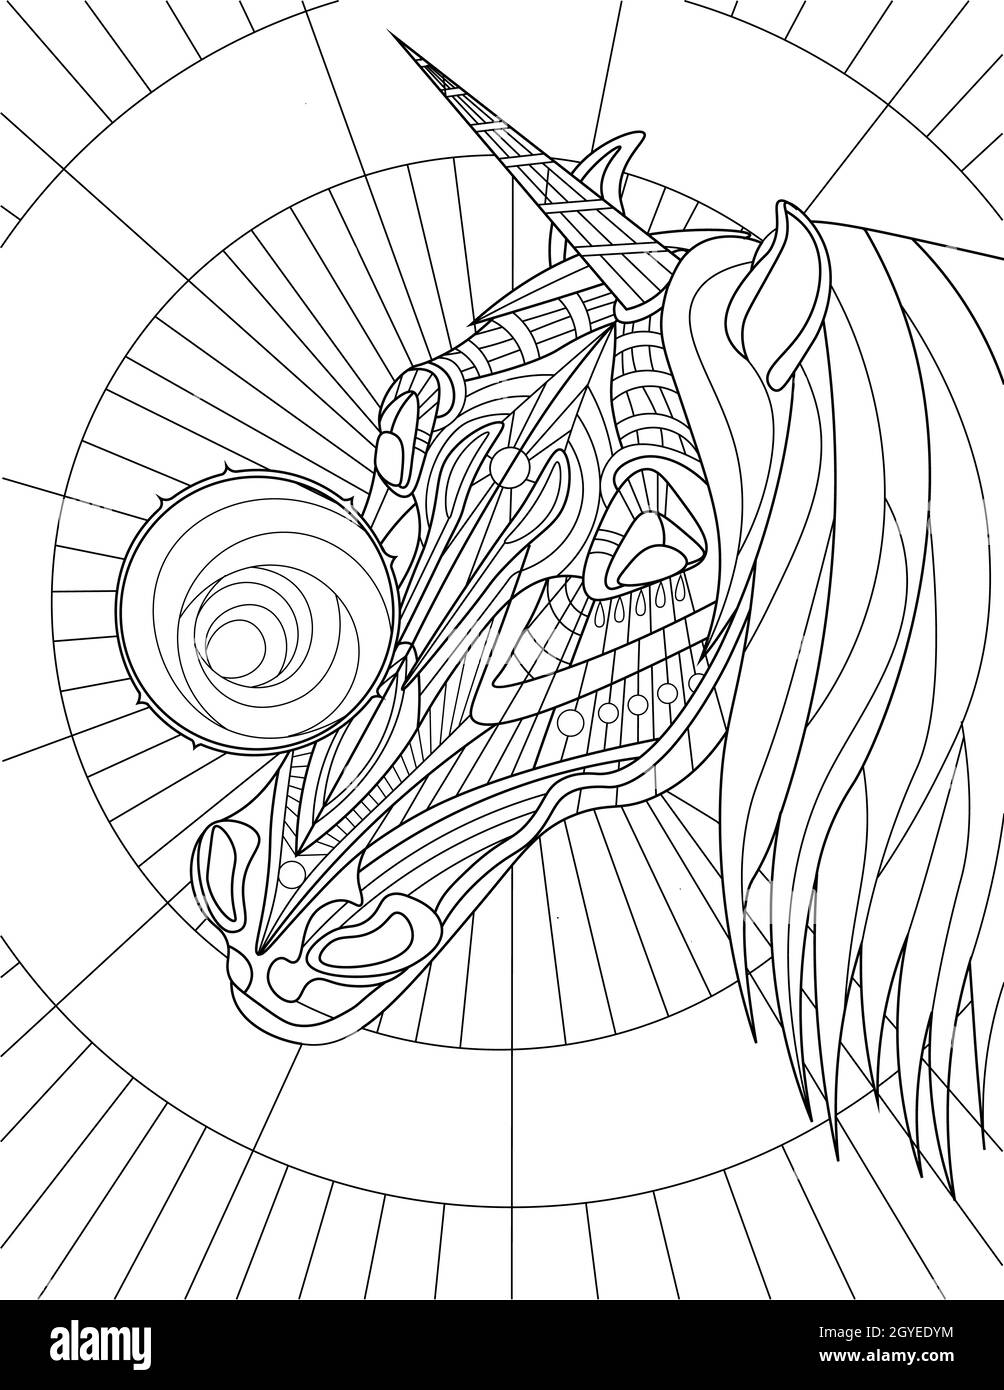 Unicorn Head With Beautiful Mane Touching Round Object Line Drawing. Stock Photo